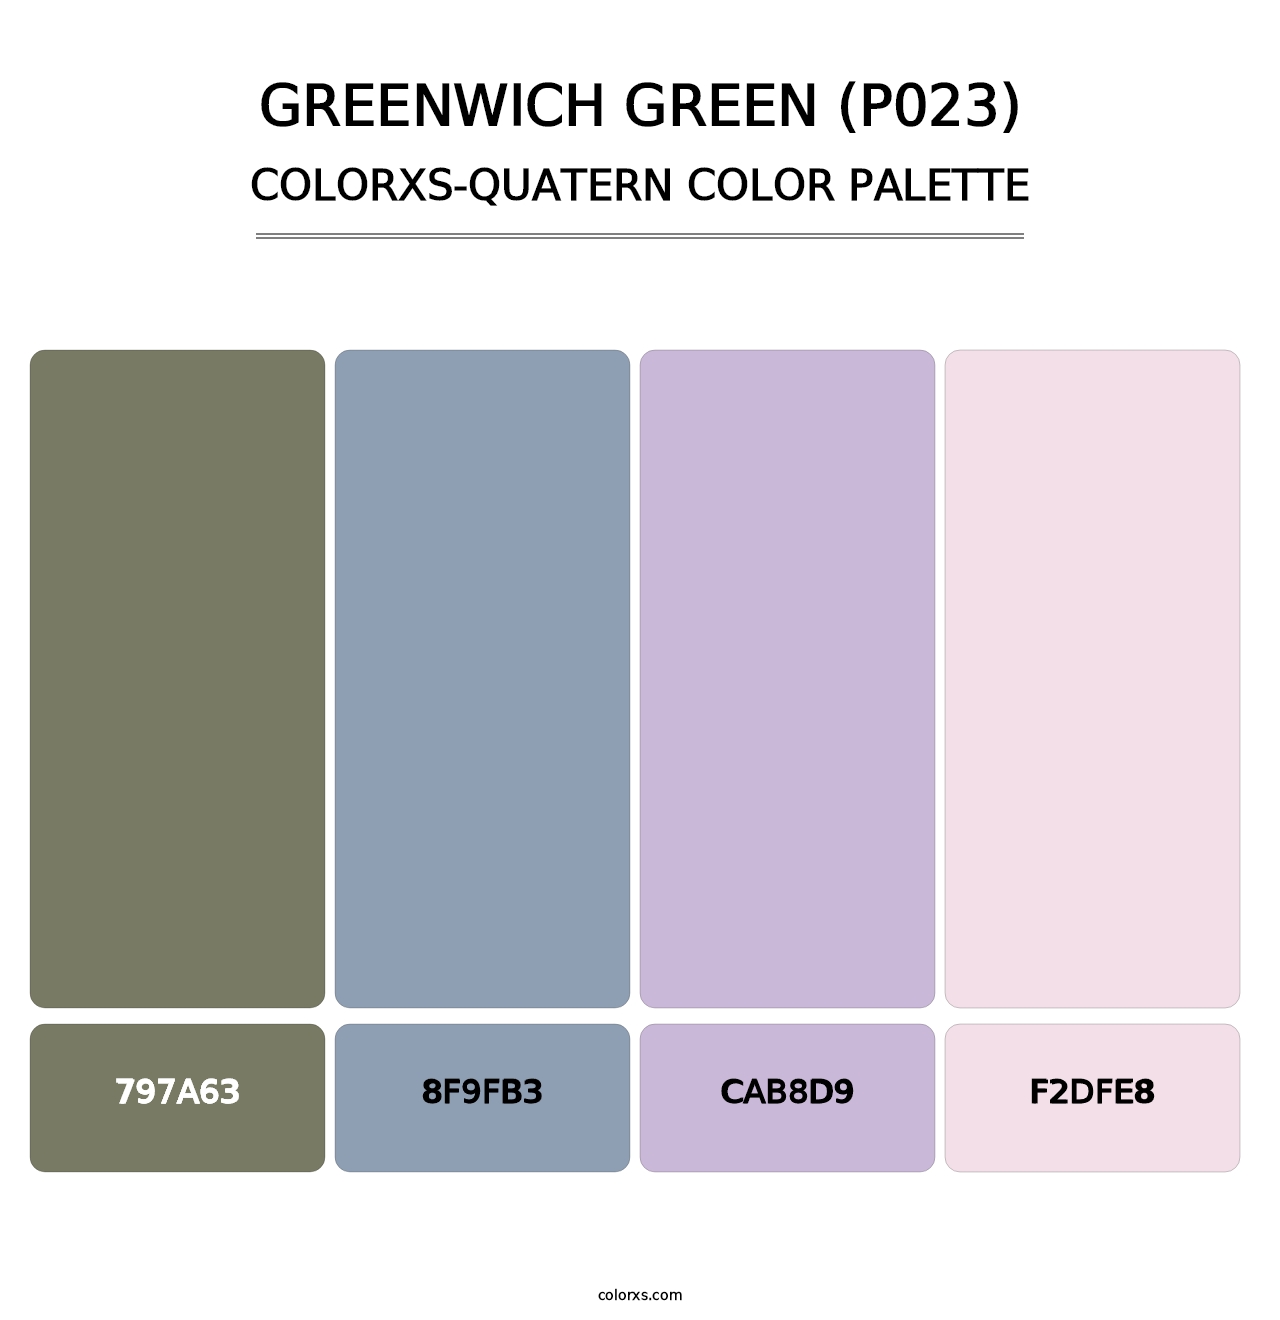 Greenwich Green (P023) - Colorxs Quatern Palette